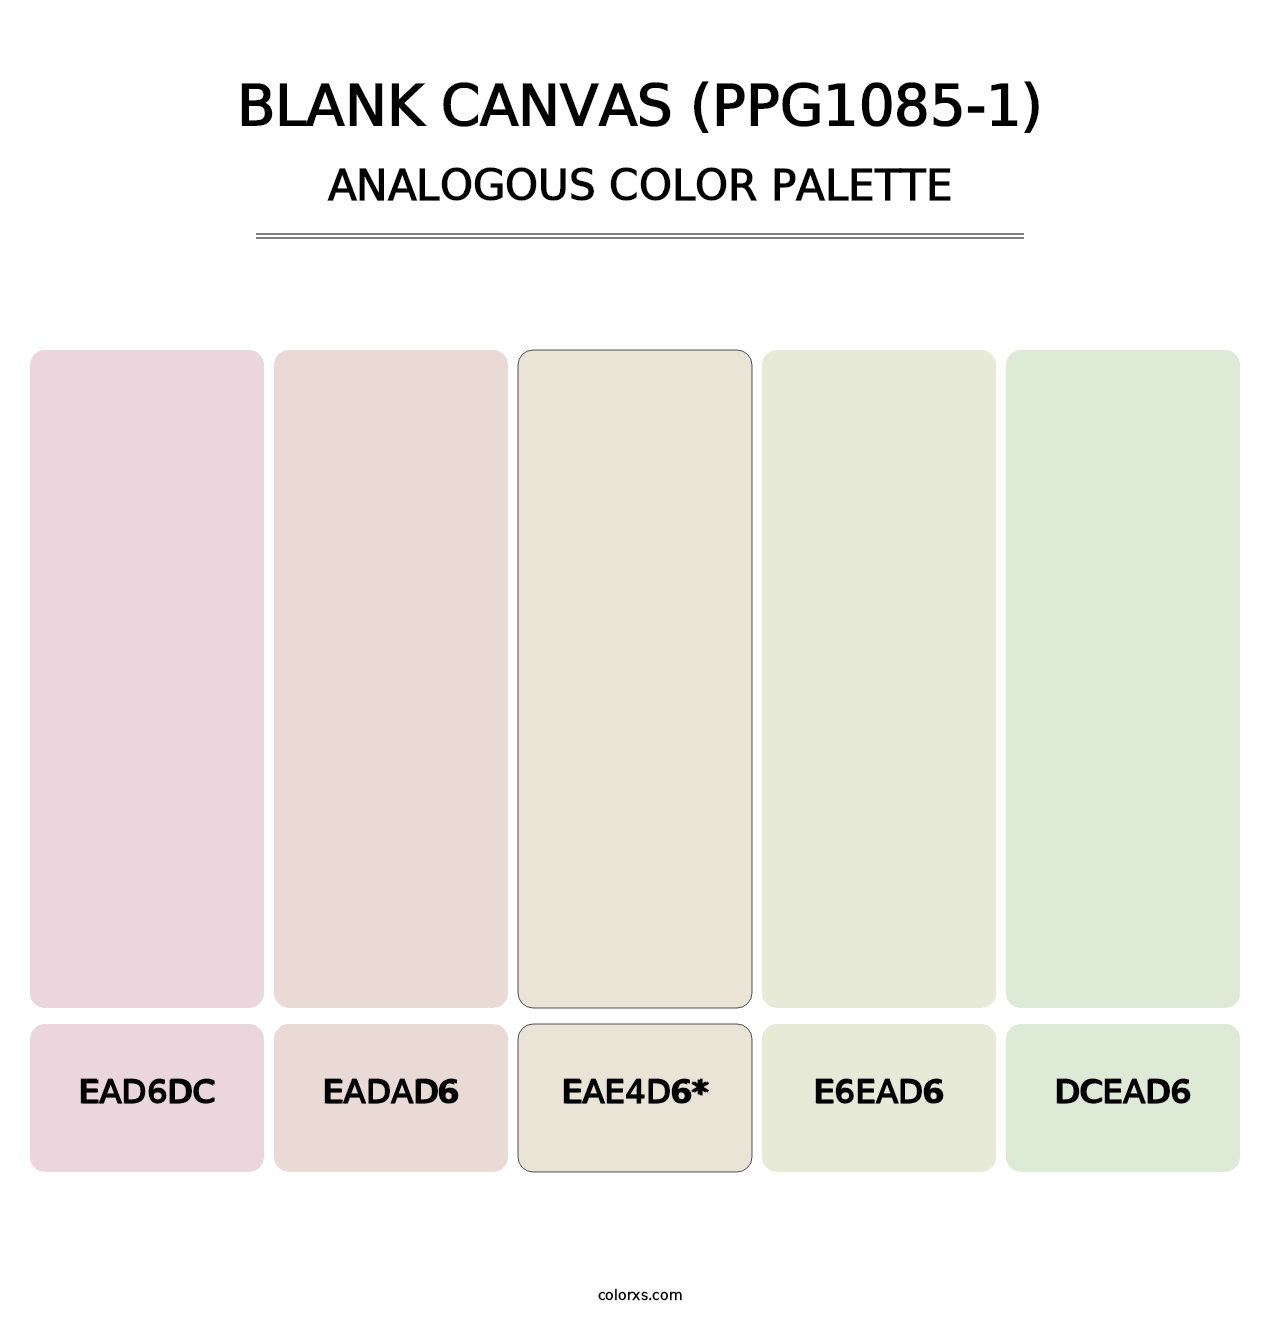 Blank Canvas (PPG1085-1) - Analogous Color Palette